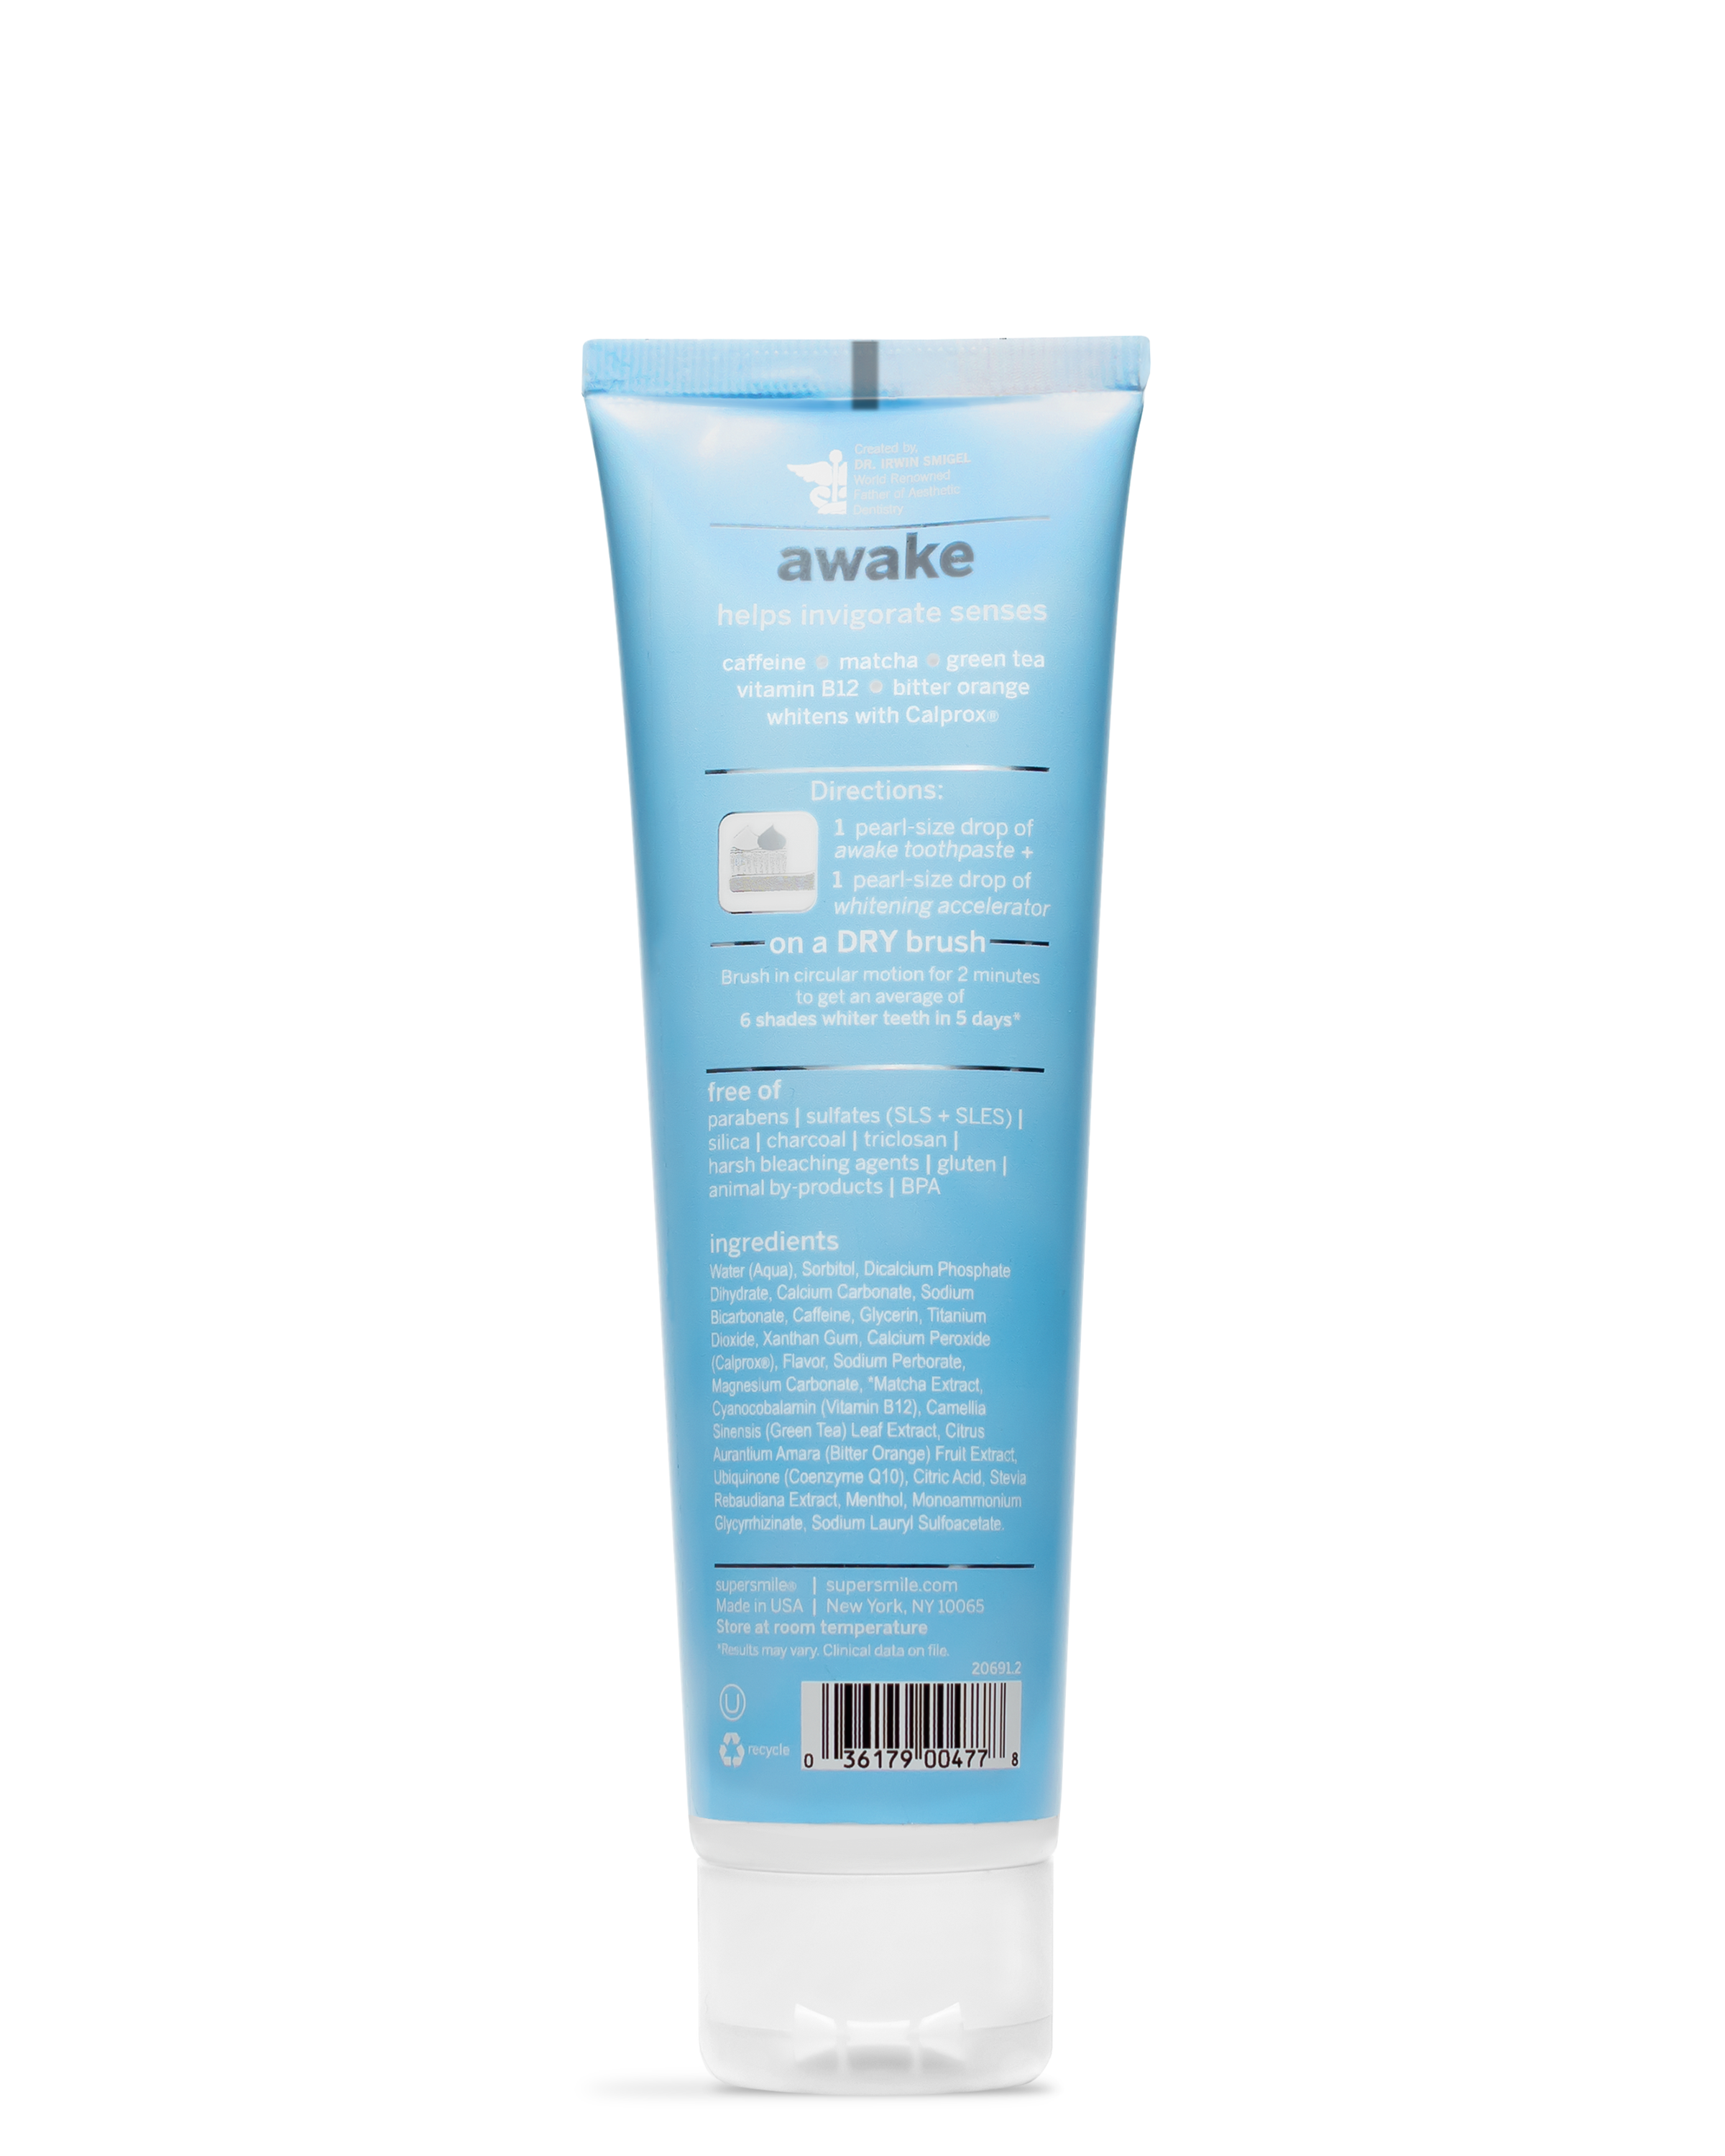 Awake Whitening Toothpaste Information